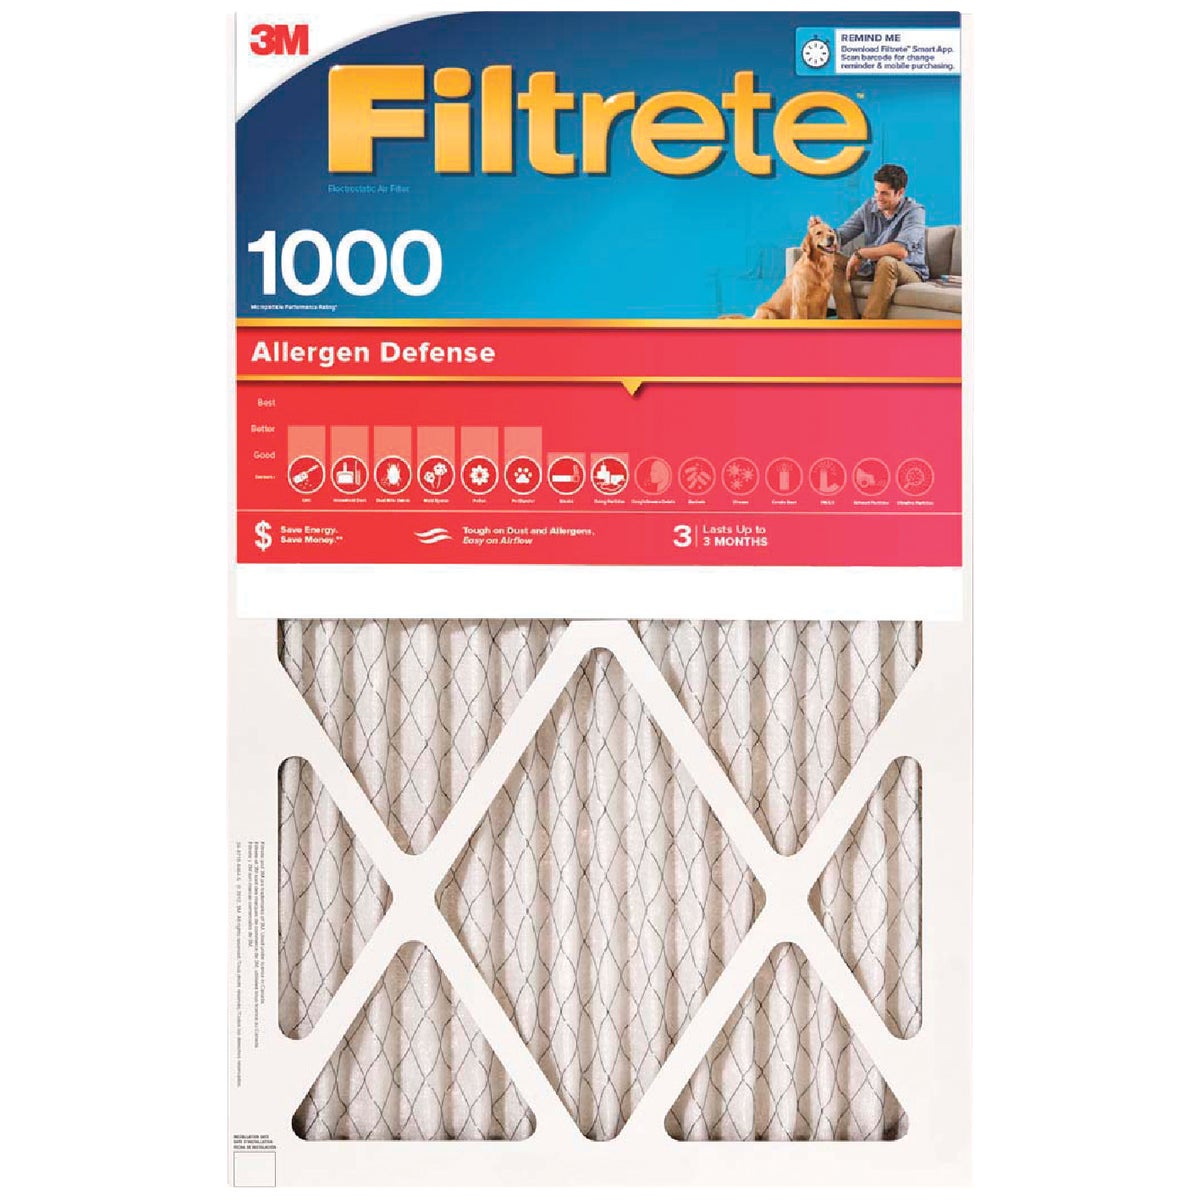 Filtrete 14 In. x 24 In. x 1 In. Allergen Defense 1000/1085 MPR Furnace Filter